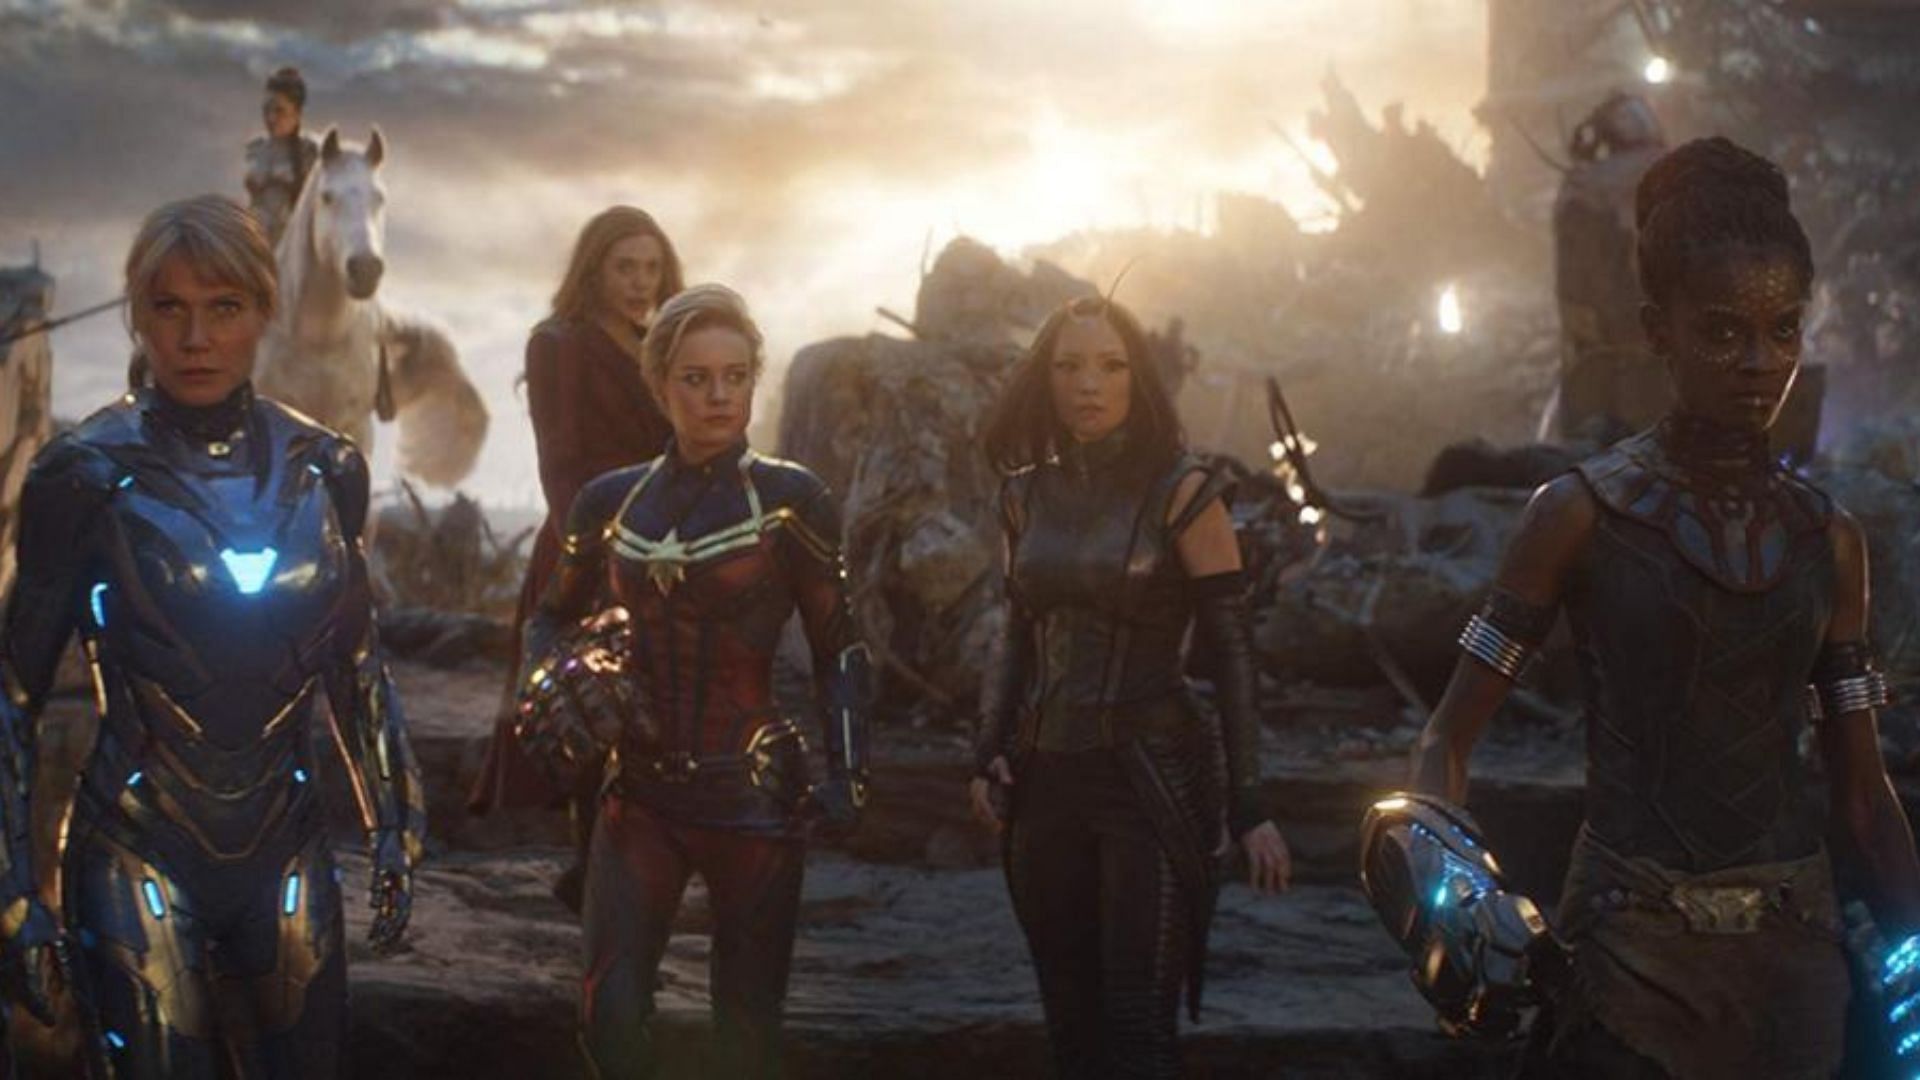 A-Force of the Avengers assembles in Avengers: Endgame (Image via IMDB)